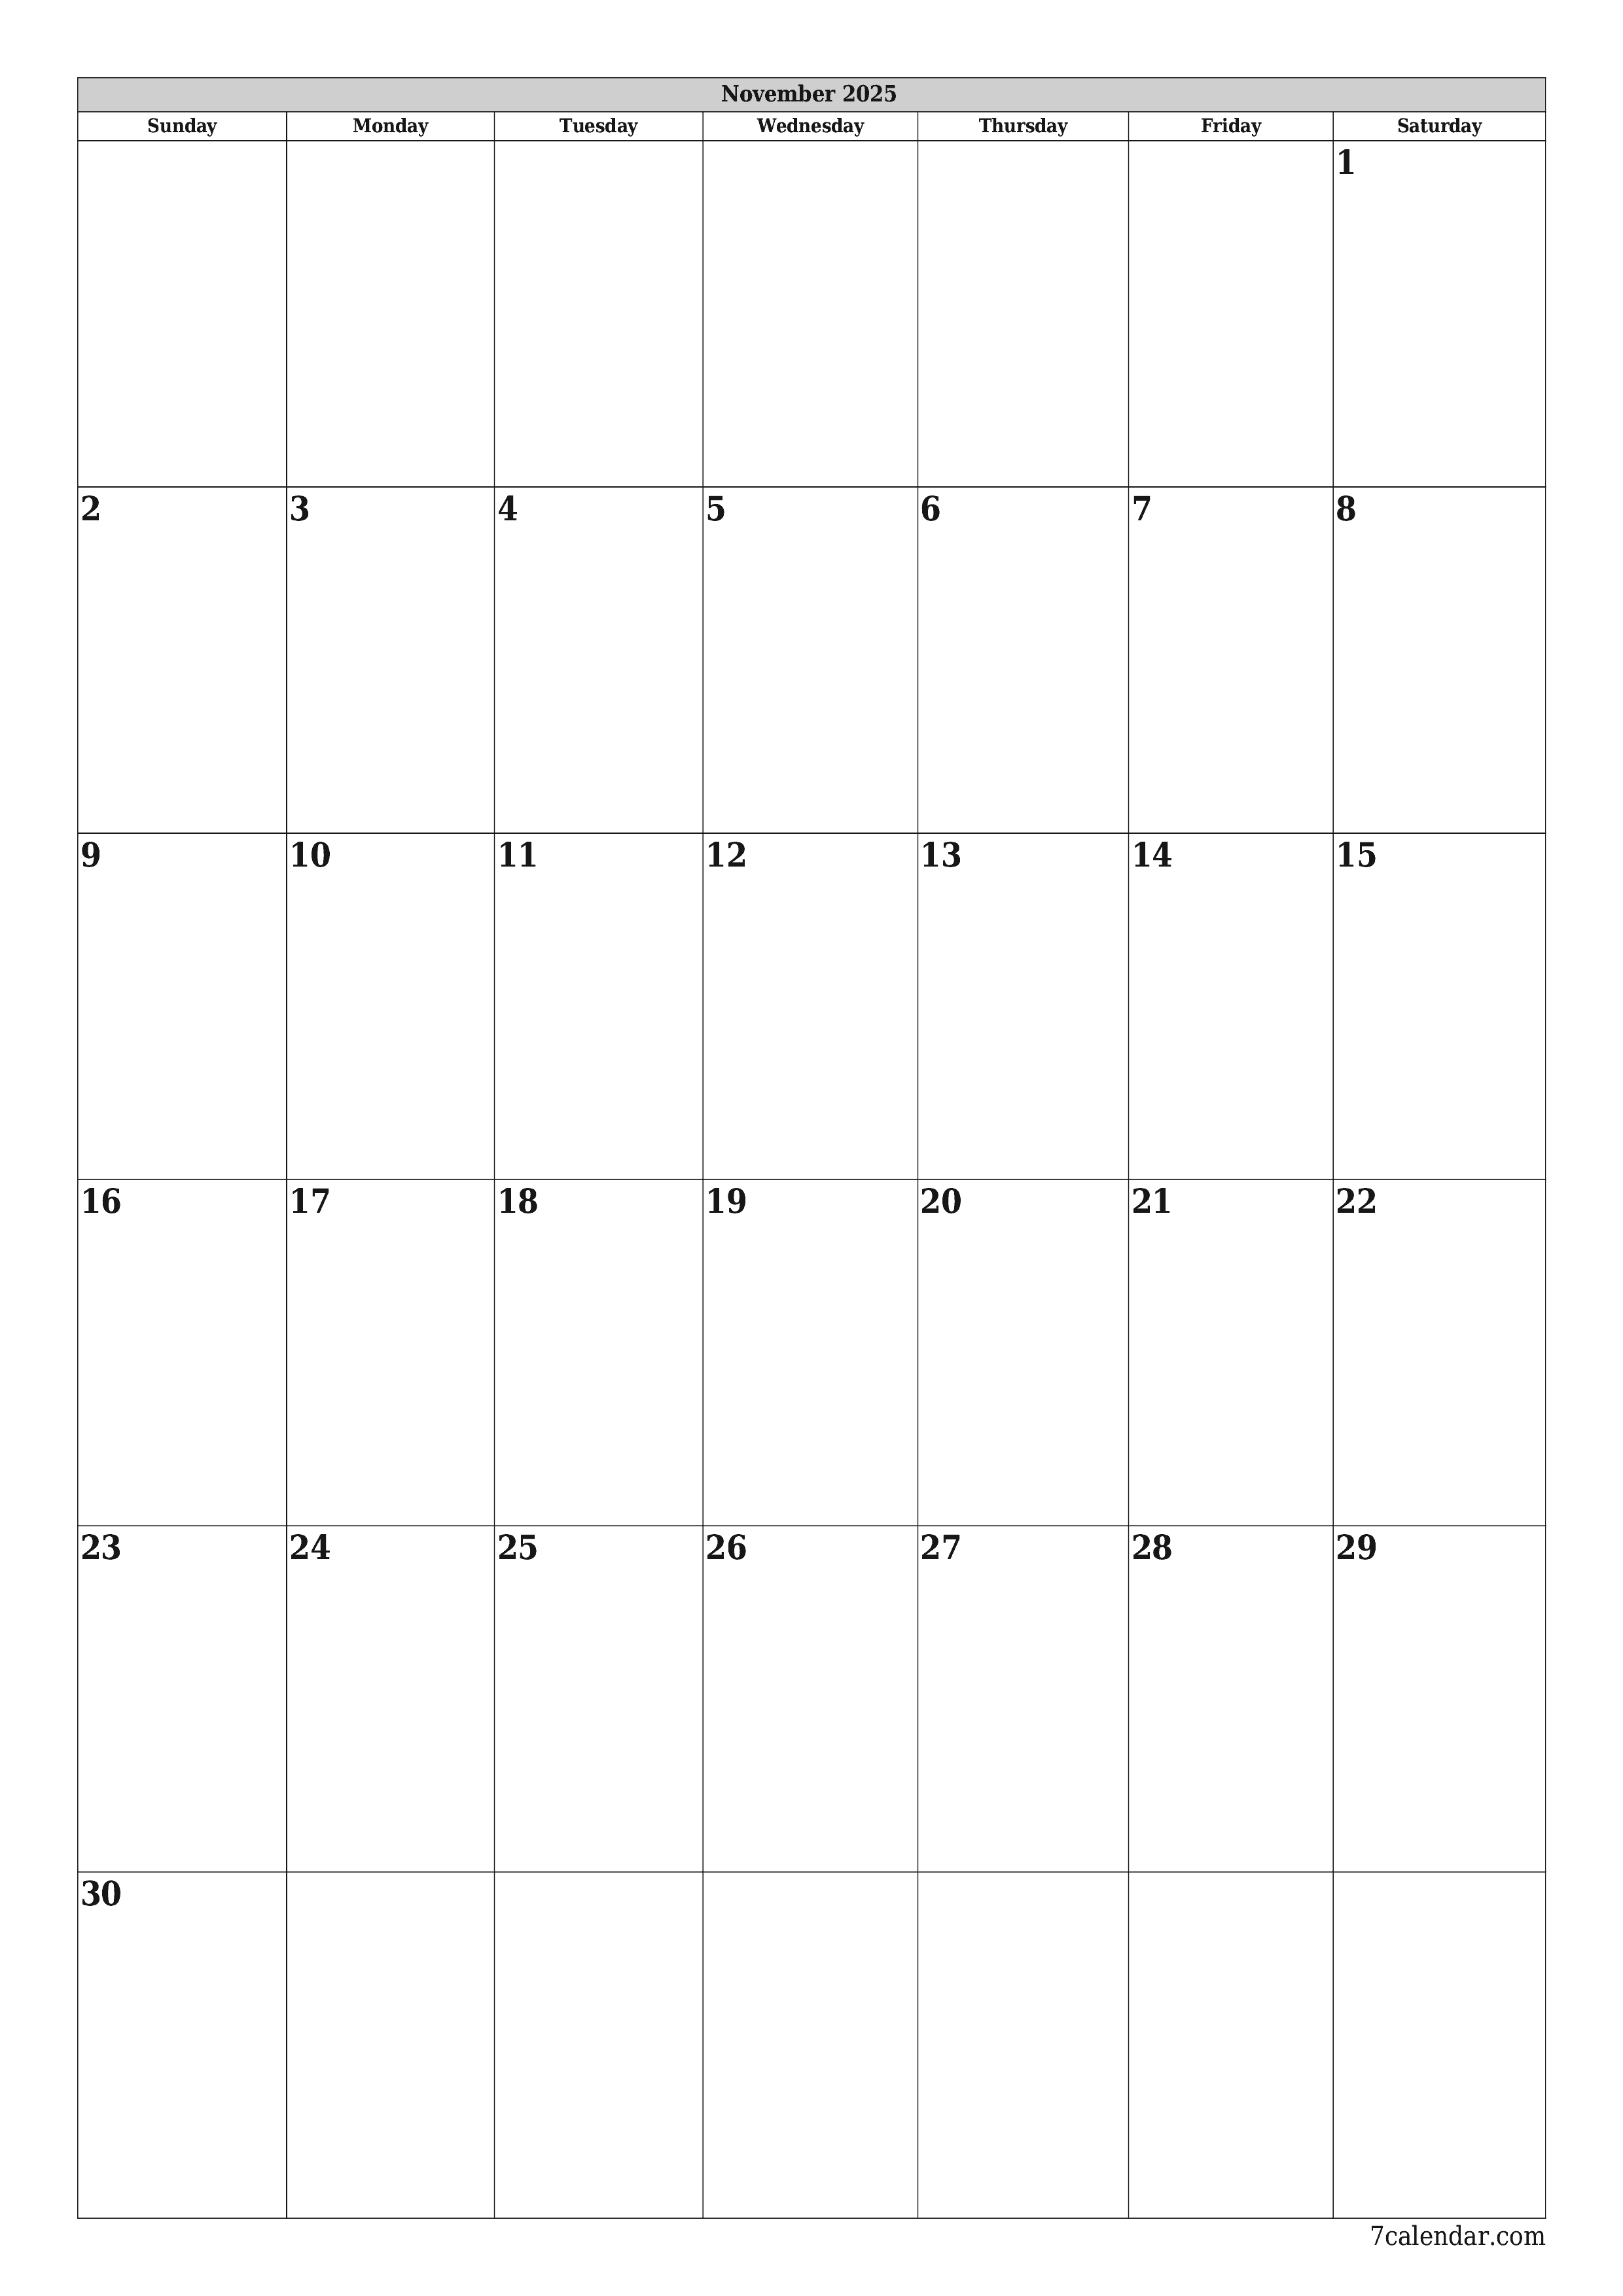 Blank calendar November 2025